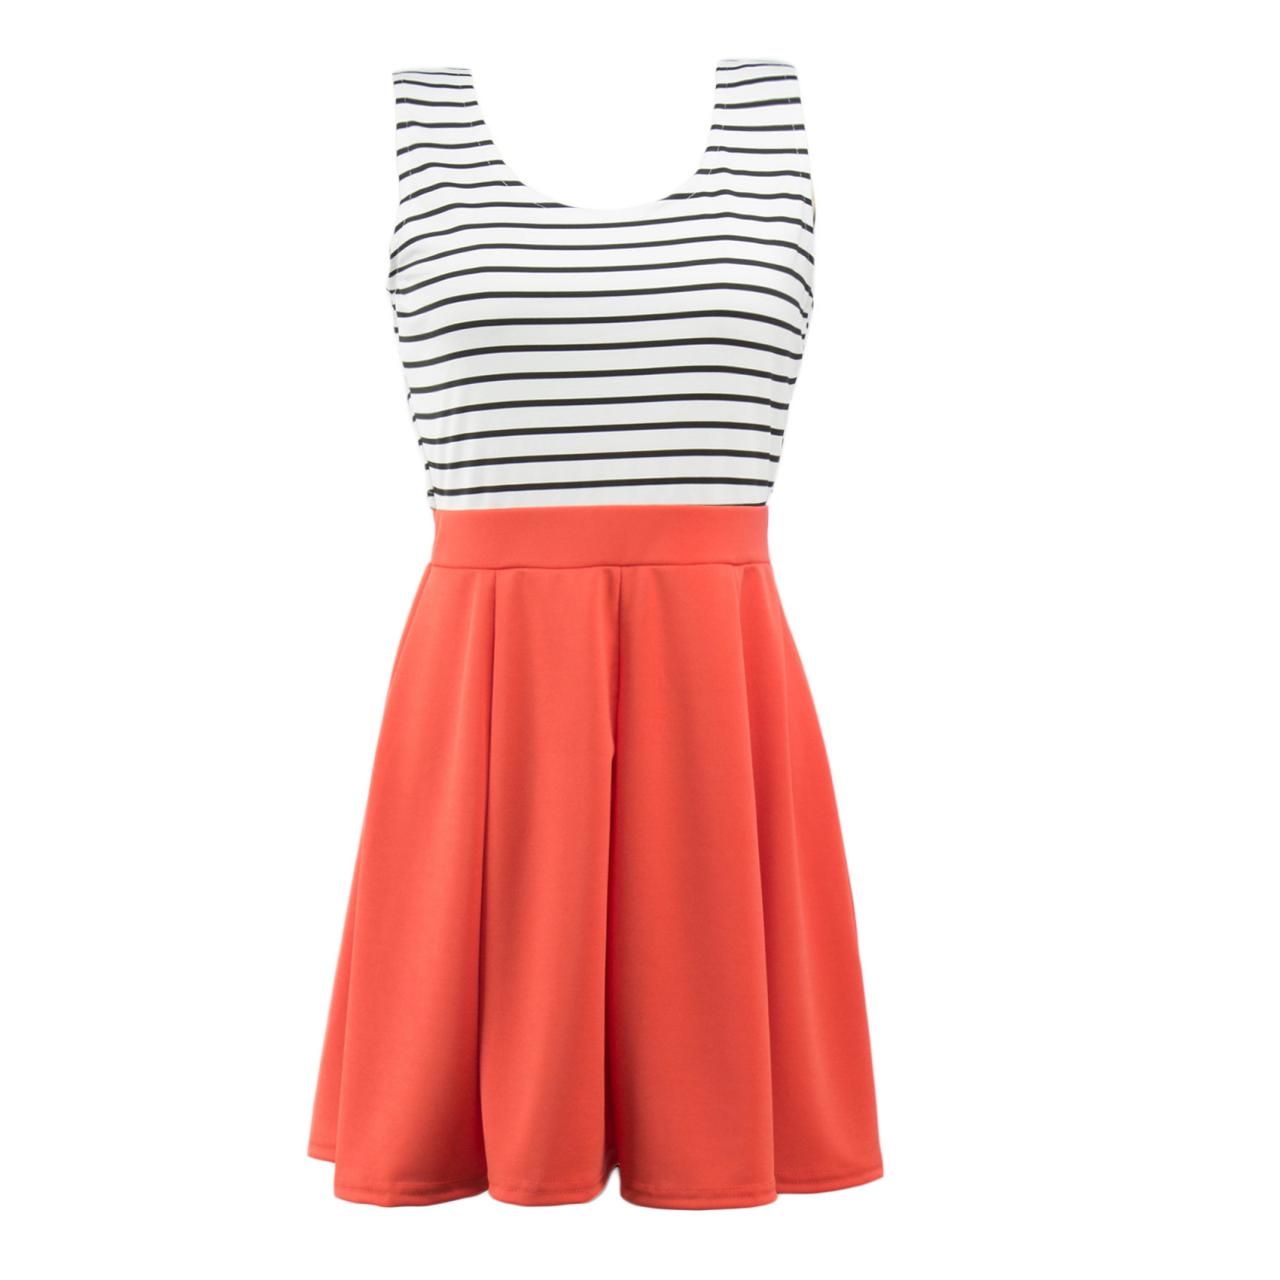 Fashion Sleeveless Stripe Print Dress - Orange